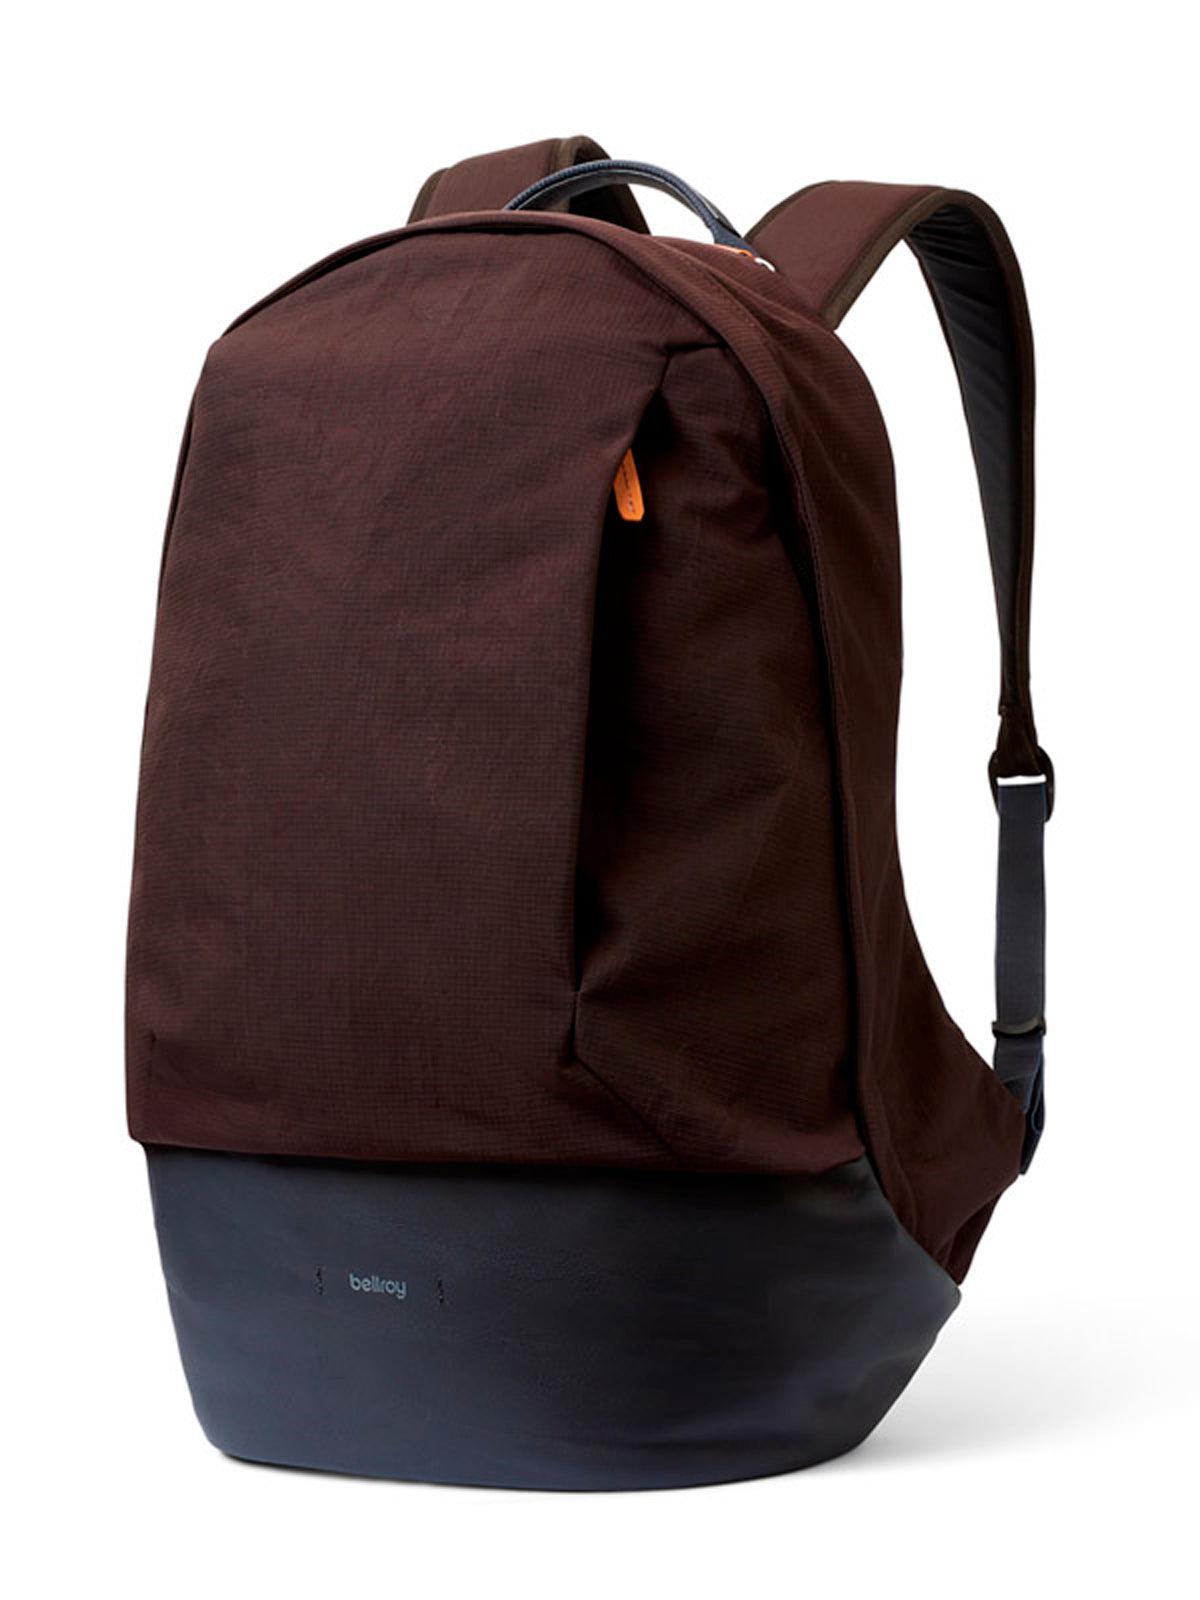 Bellroy Classic Backpack Premium Edition Deep Plum